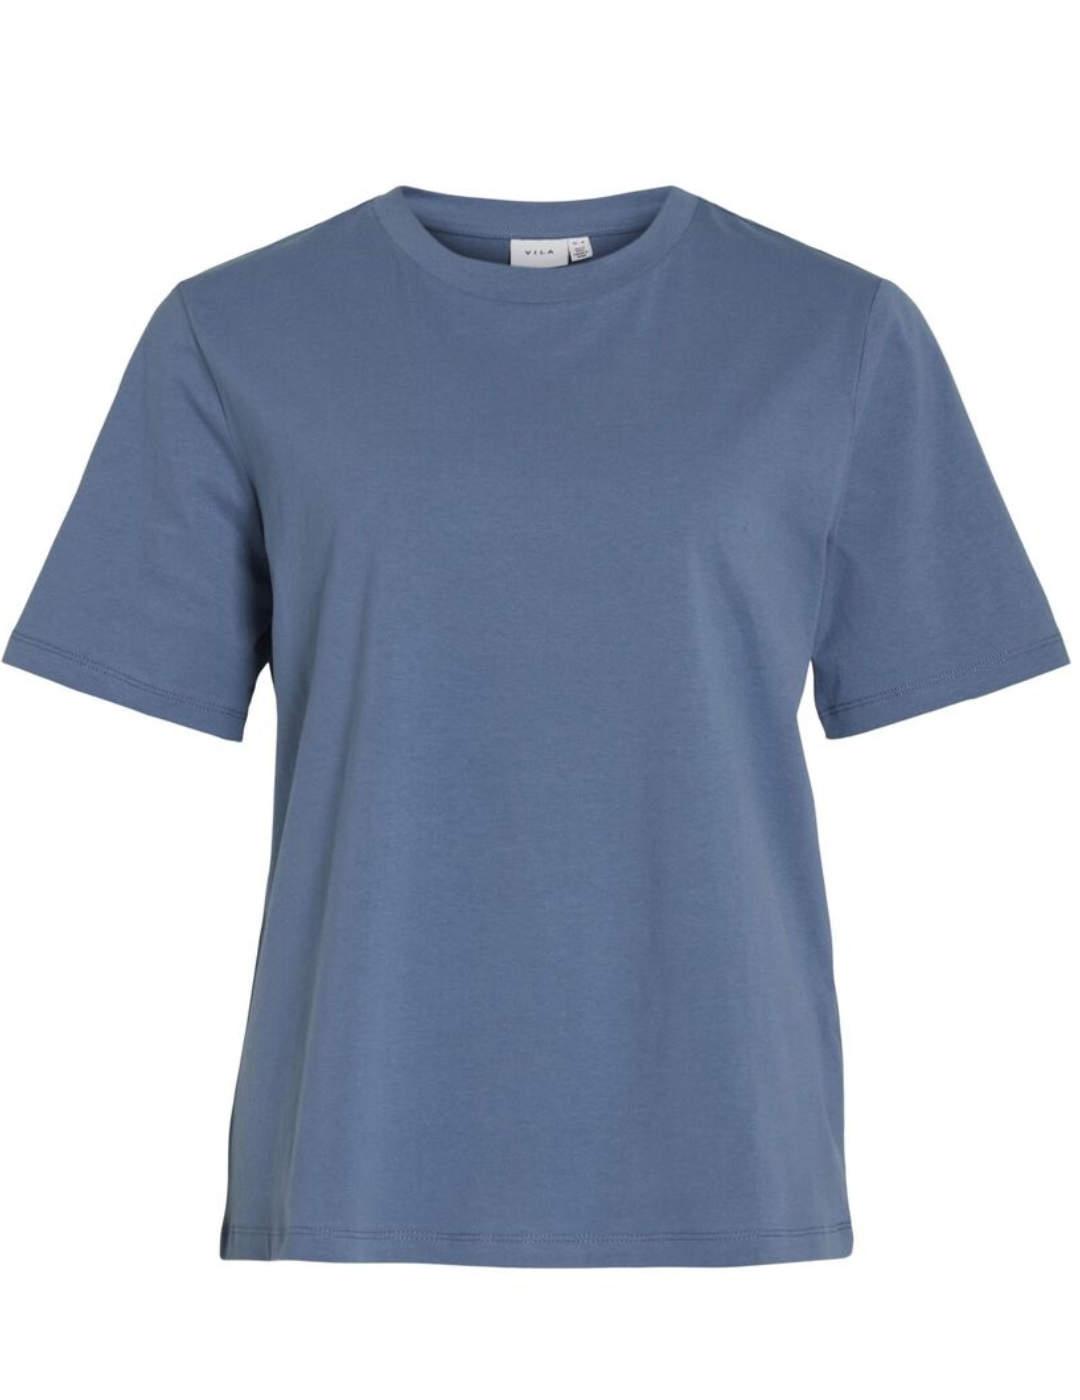 Camiseta Vila Darlene azul Regular manga corta para mujer